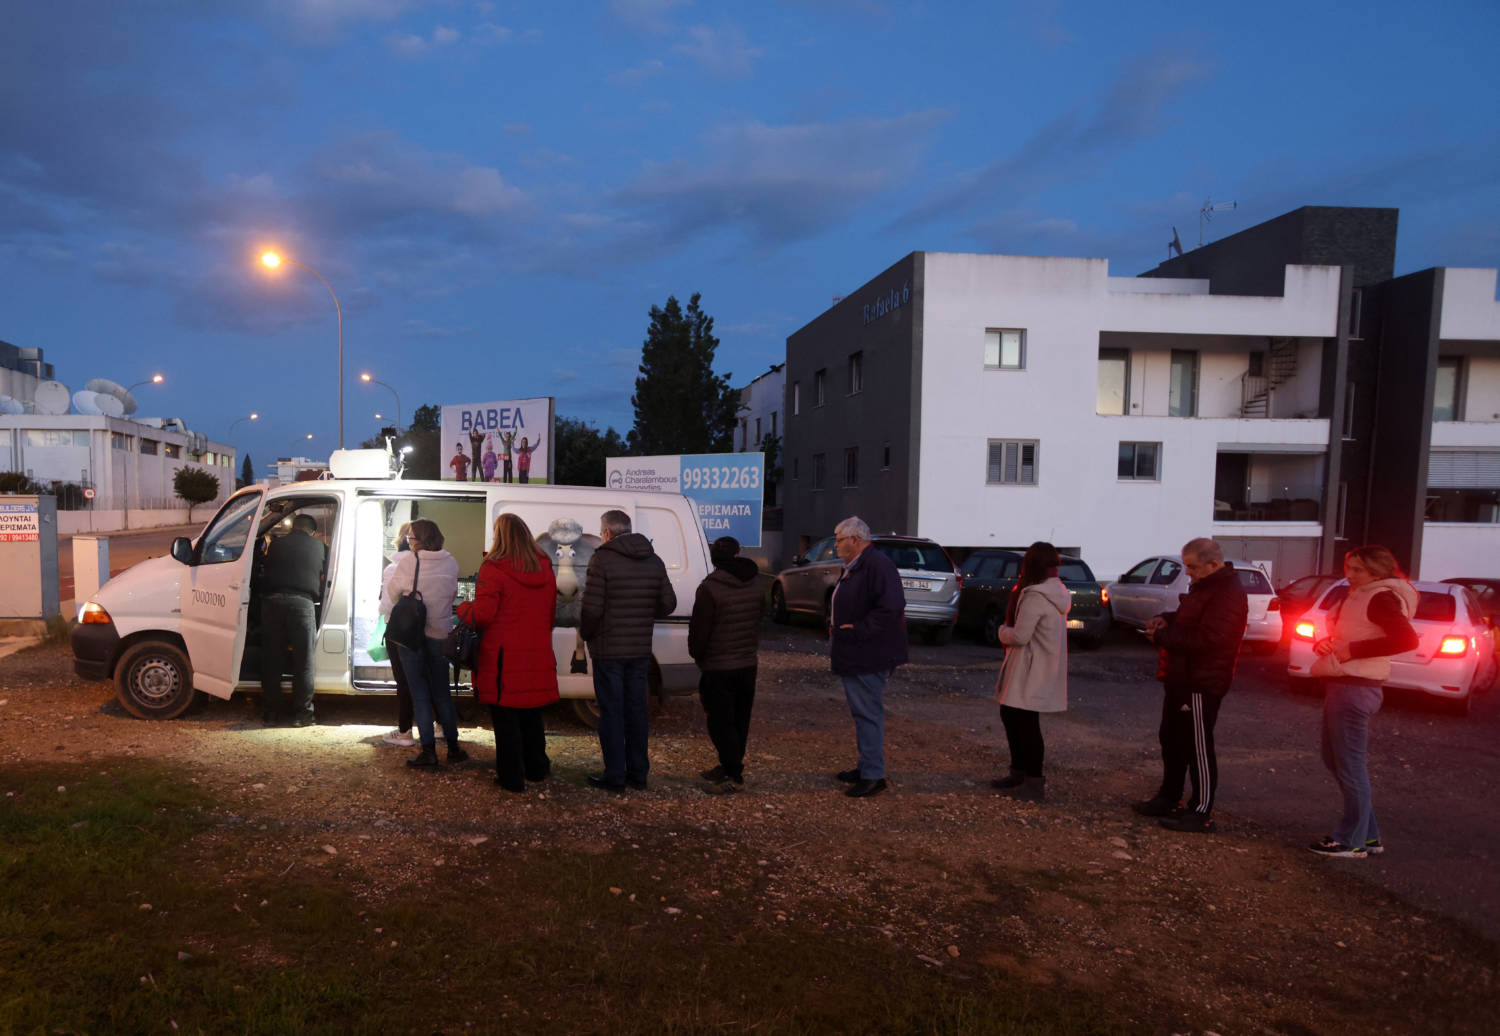 People Wait In Line To Buy Products From Pantelis Panteli's Van In Nicosia